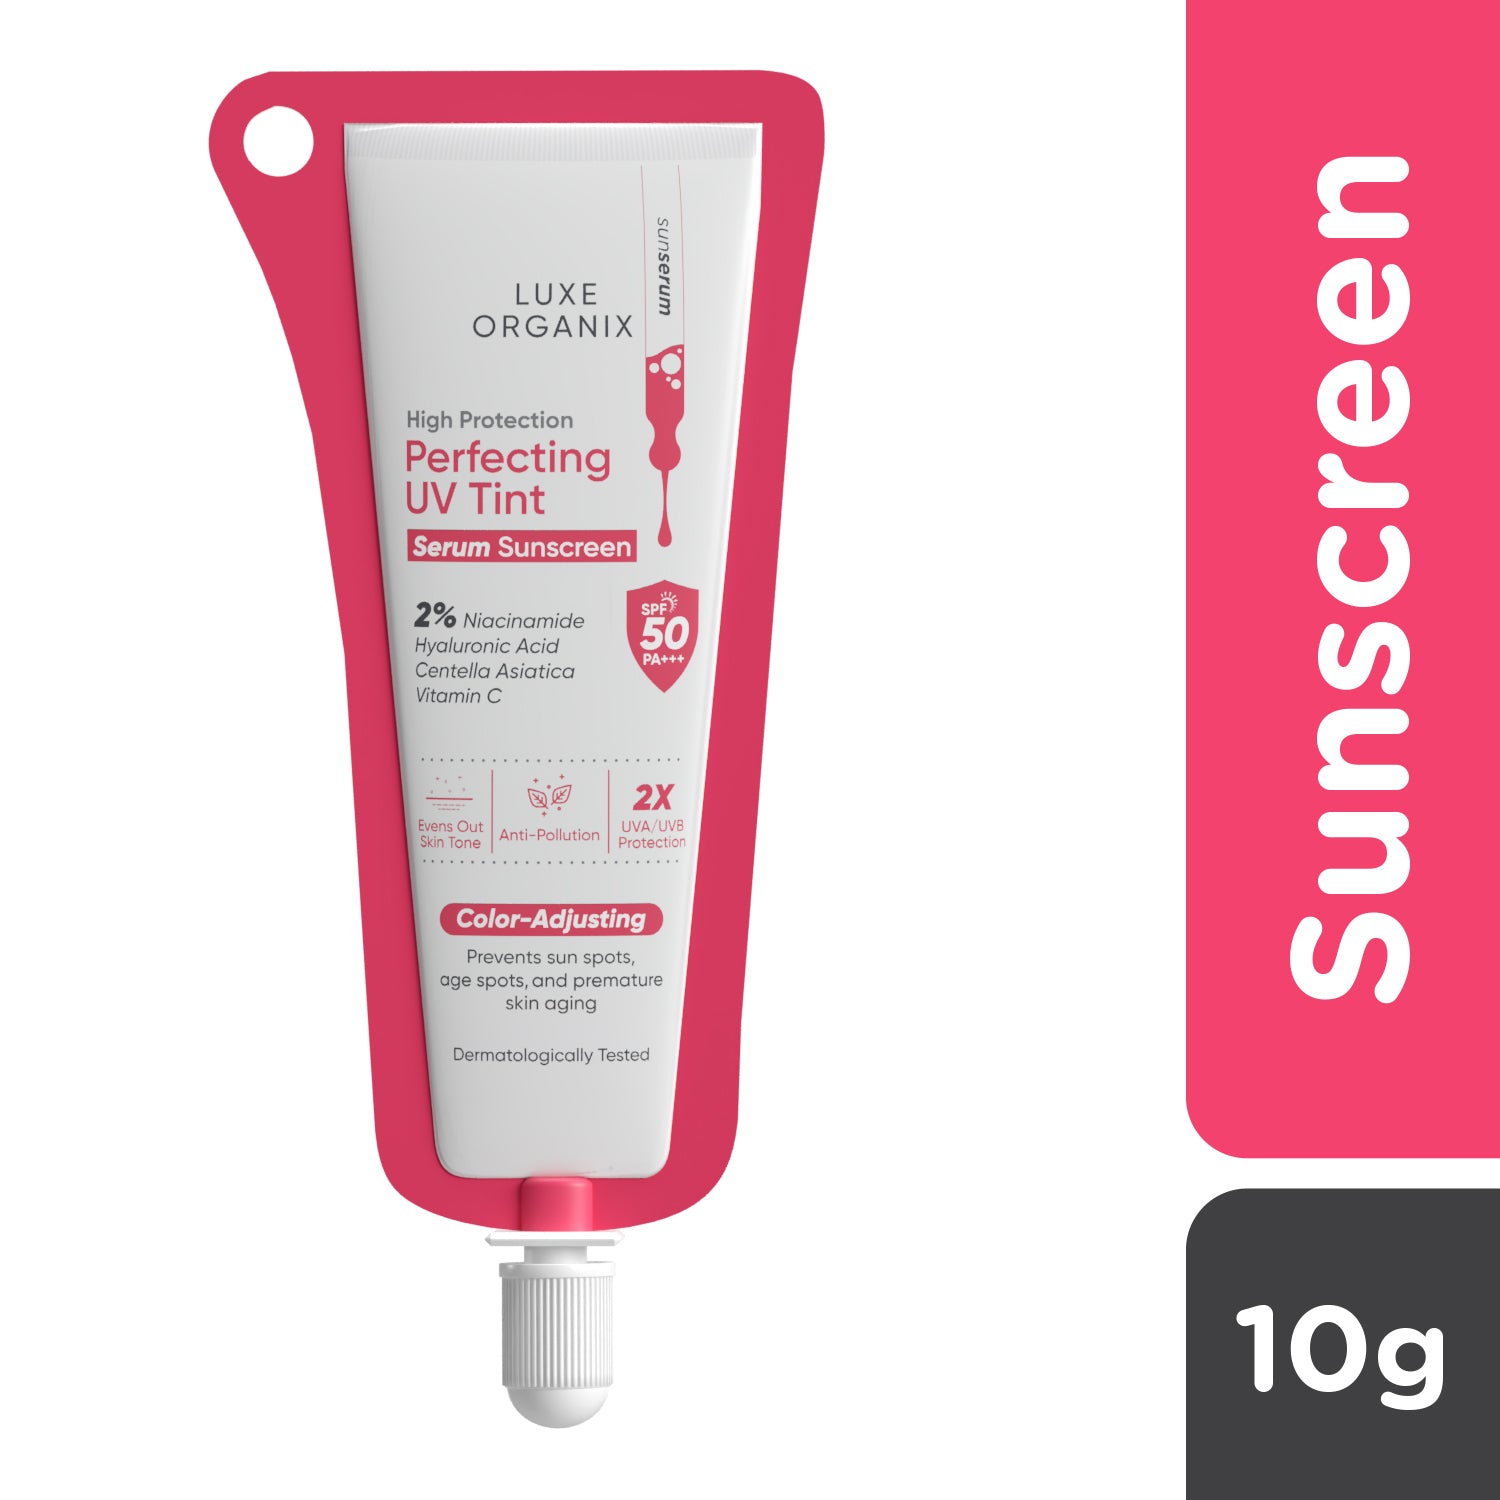 High Protection Perfecting UV Tint Serum Sunscreen SPF 50 PA + 10g